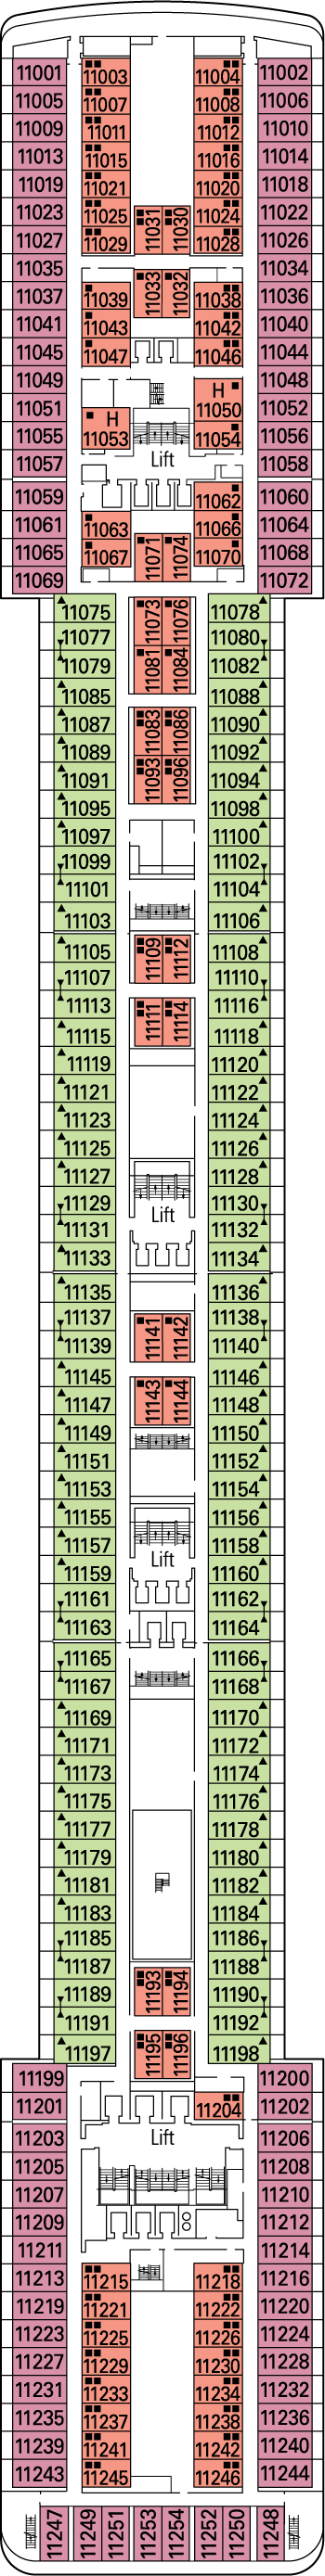 Adagio Deck Plan